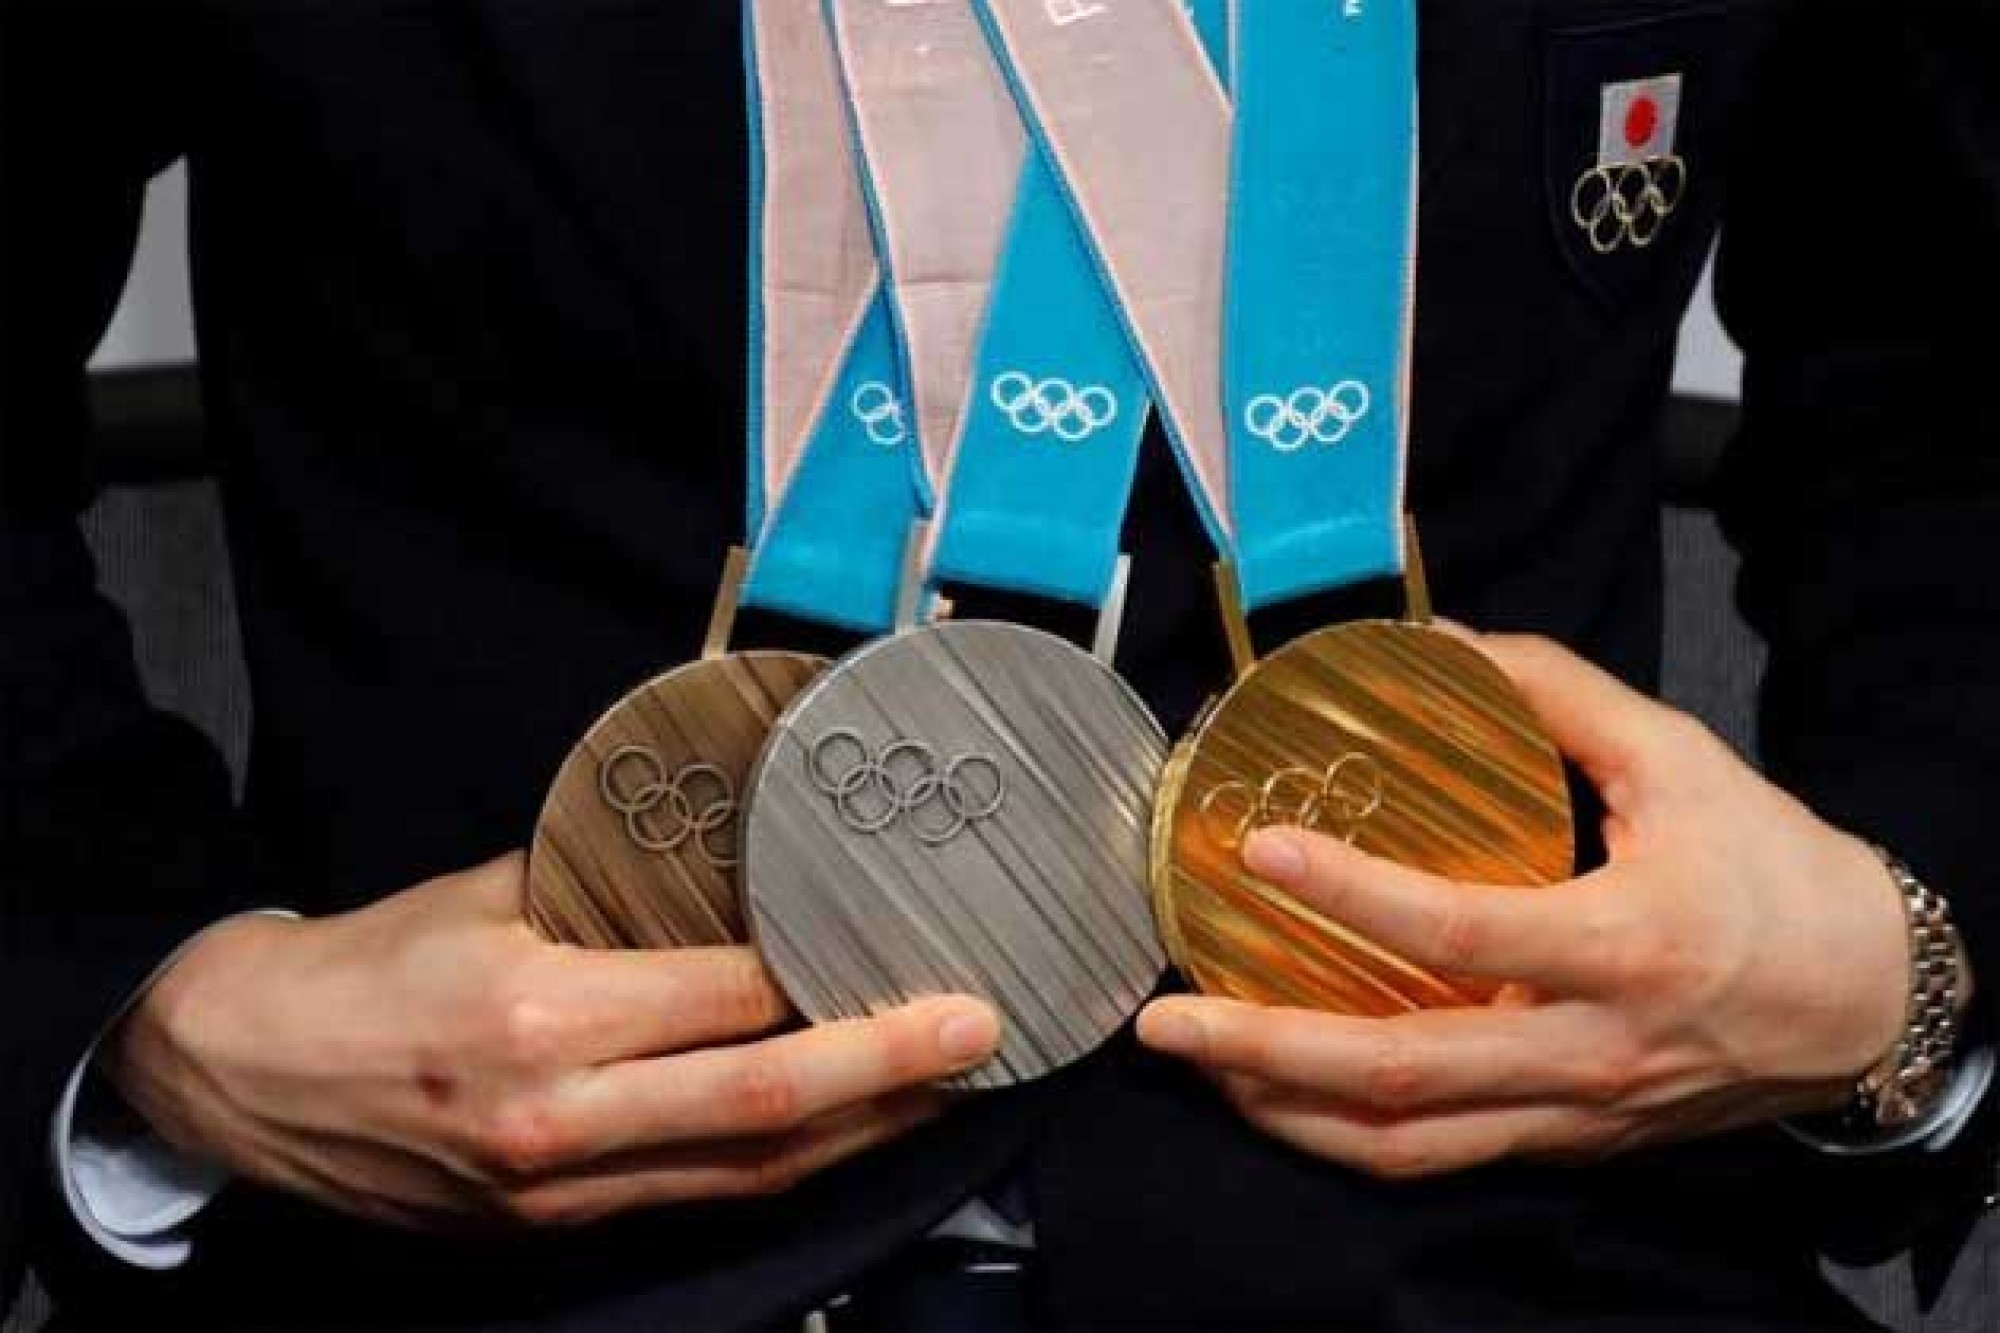 Sporting medals. Медали Токио 2020. Медали олимпиады в Токио 2021. Олимпийские награды. Золотая Олимпийская медаль.